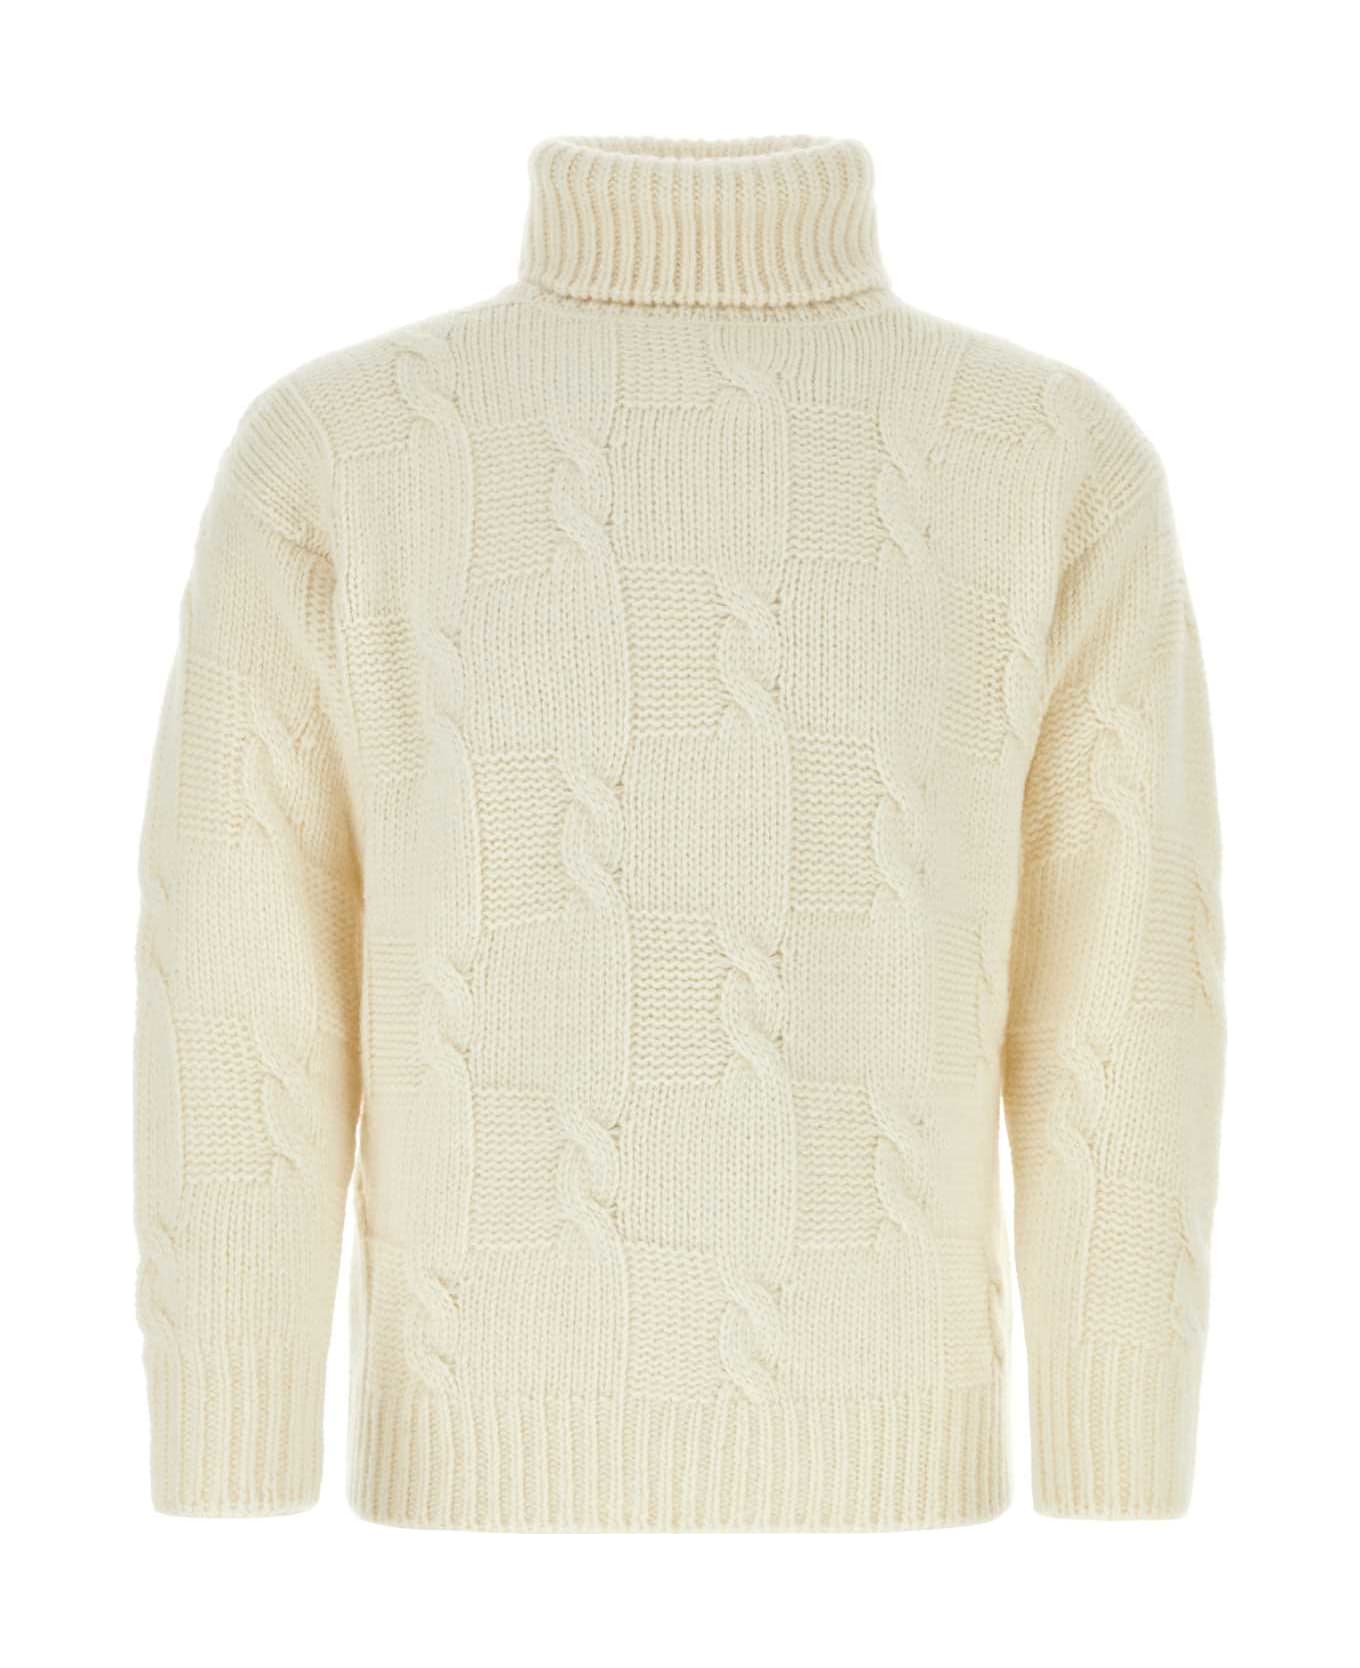 PT Torino Ivory Wool Blend Sweater - L015